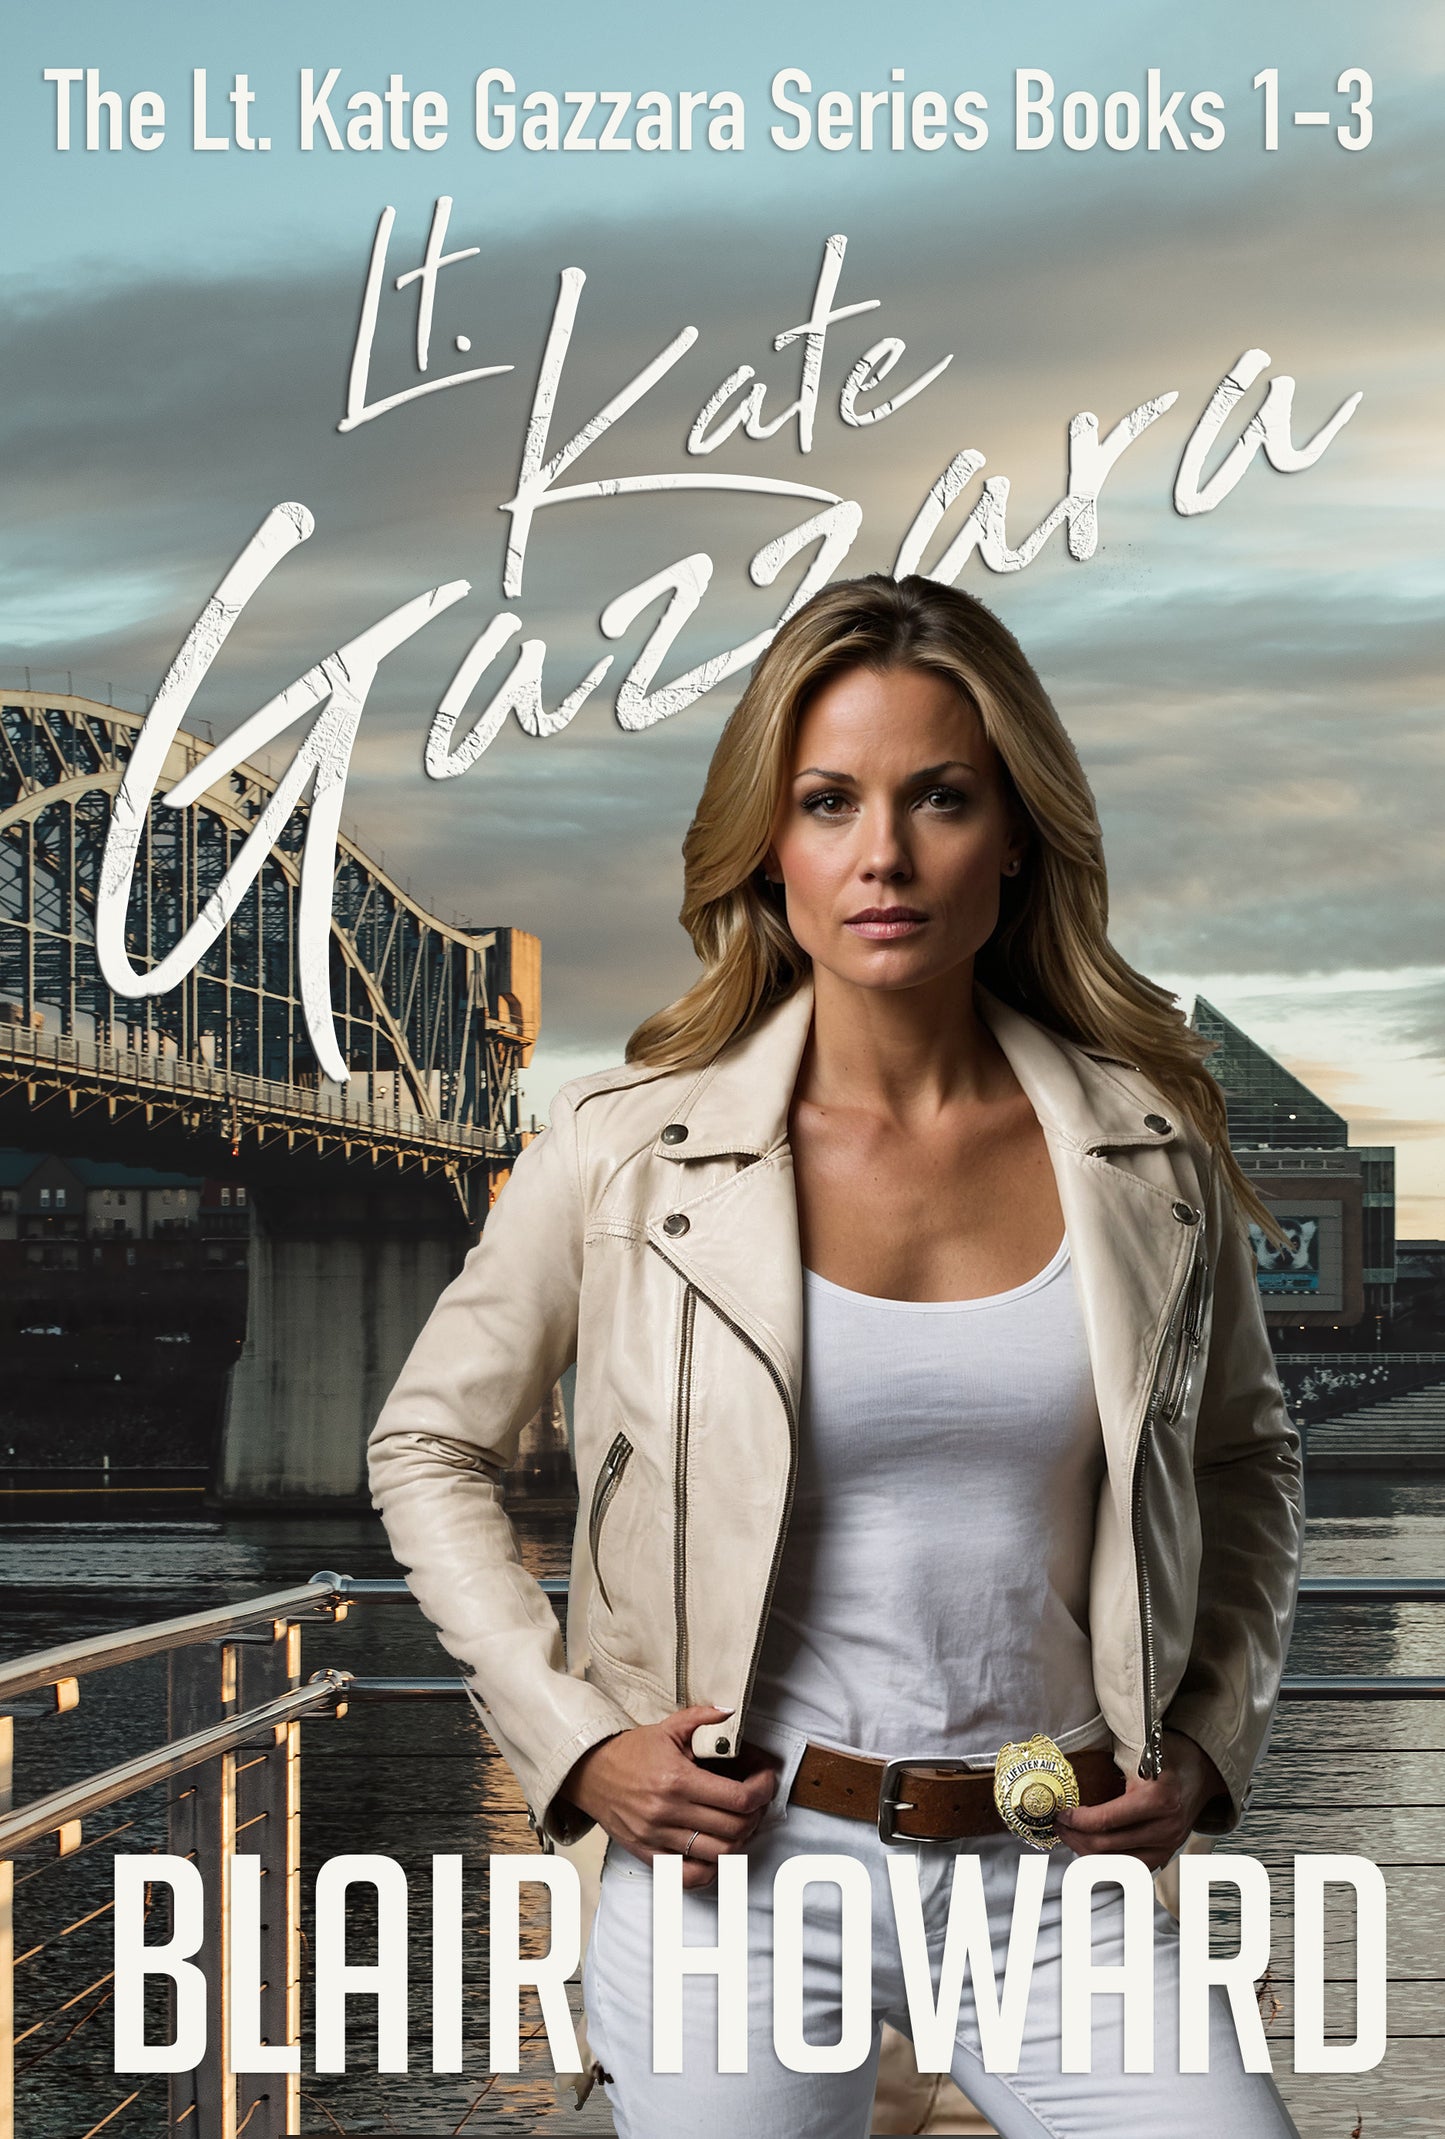 The Lt. Kate Gazzara Series - eBooks 1 - 3